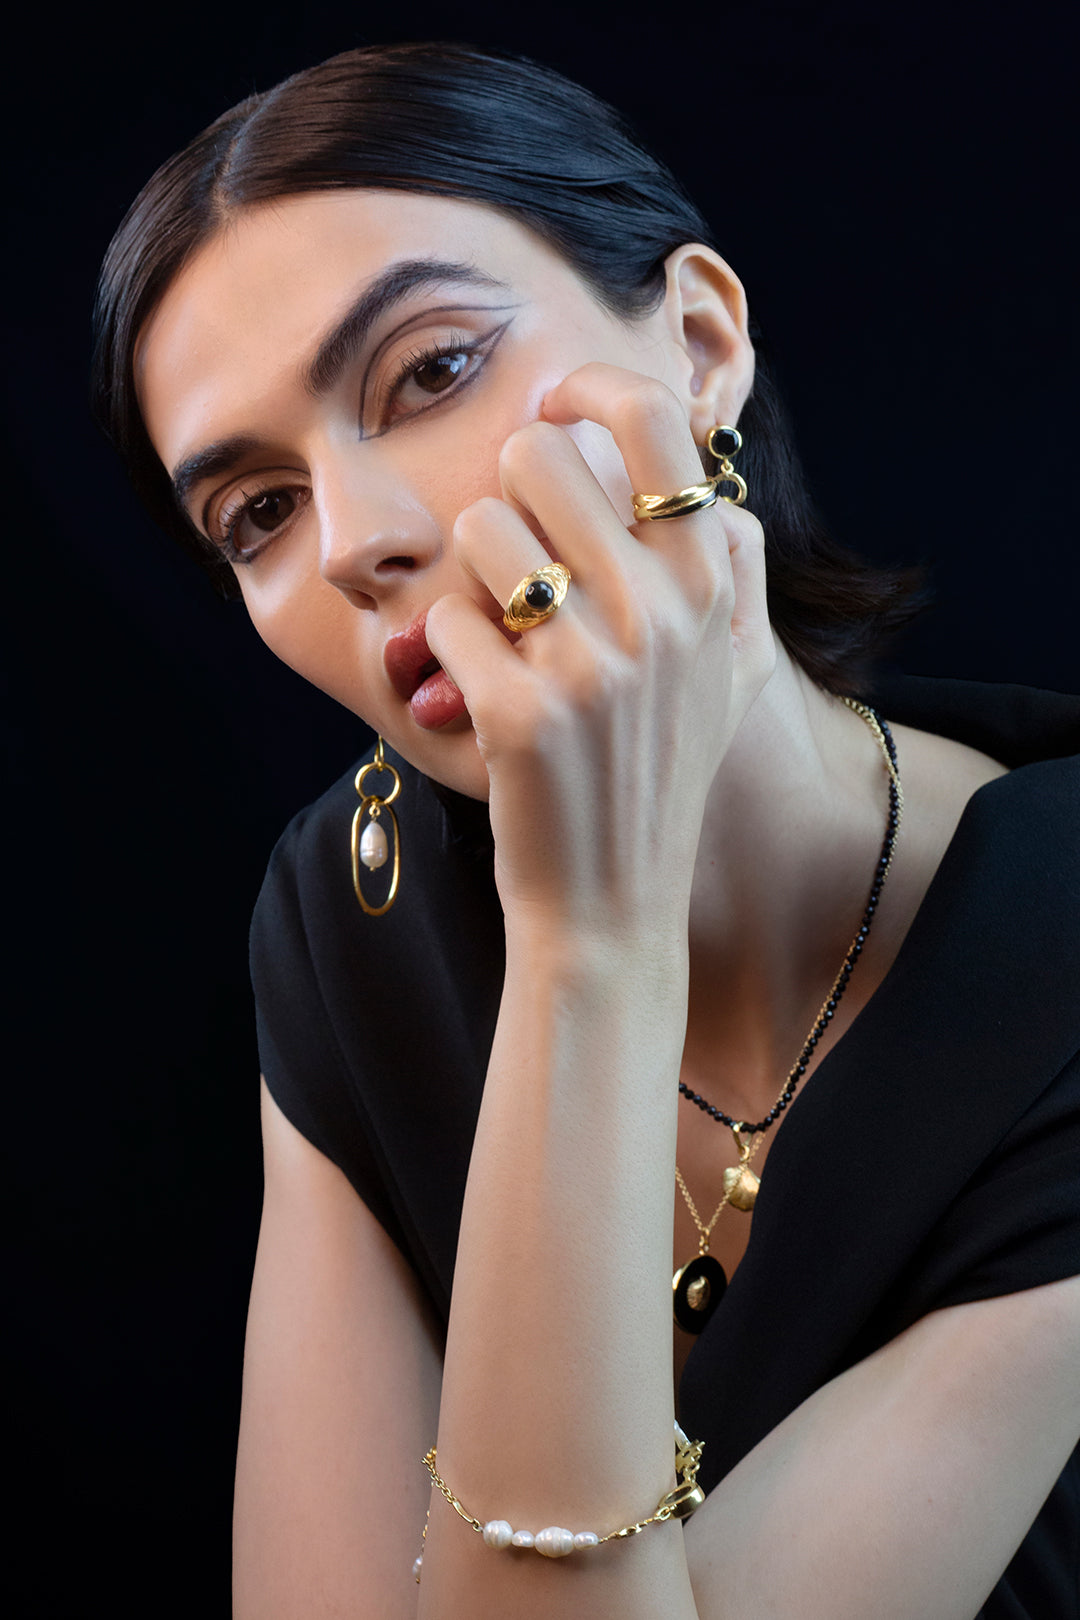 Daphine Black Onyx Gold Signet Ring Mamour Paris Jewelry